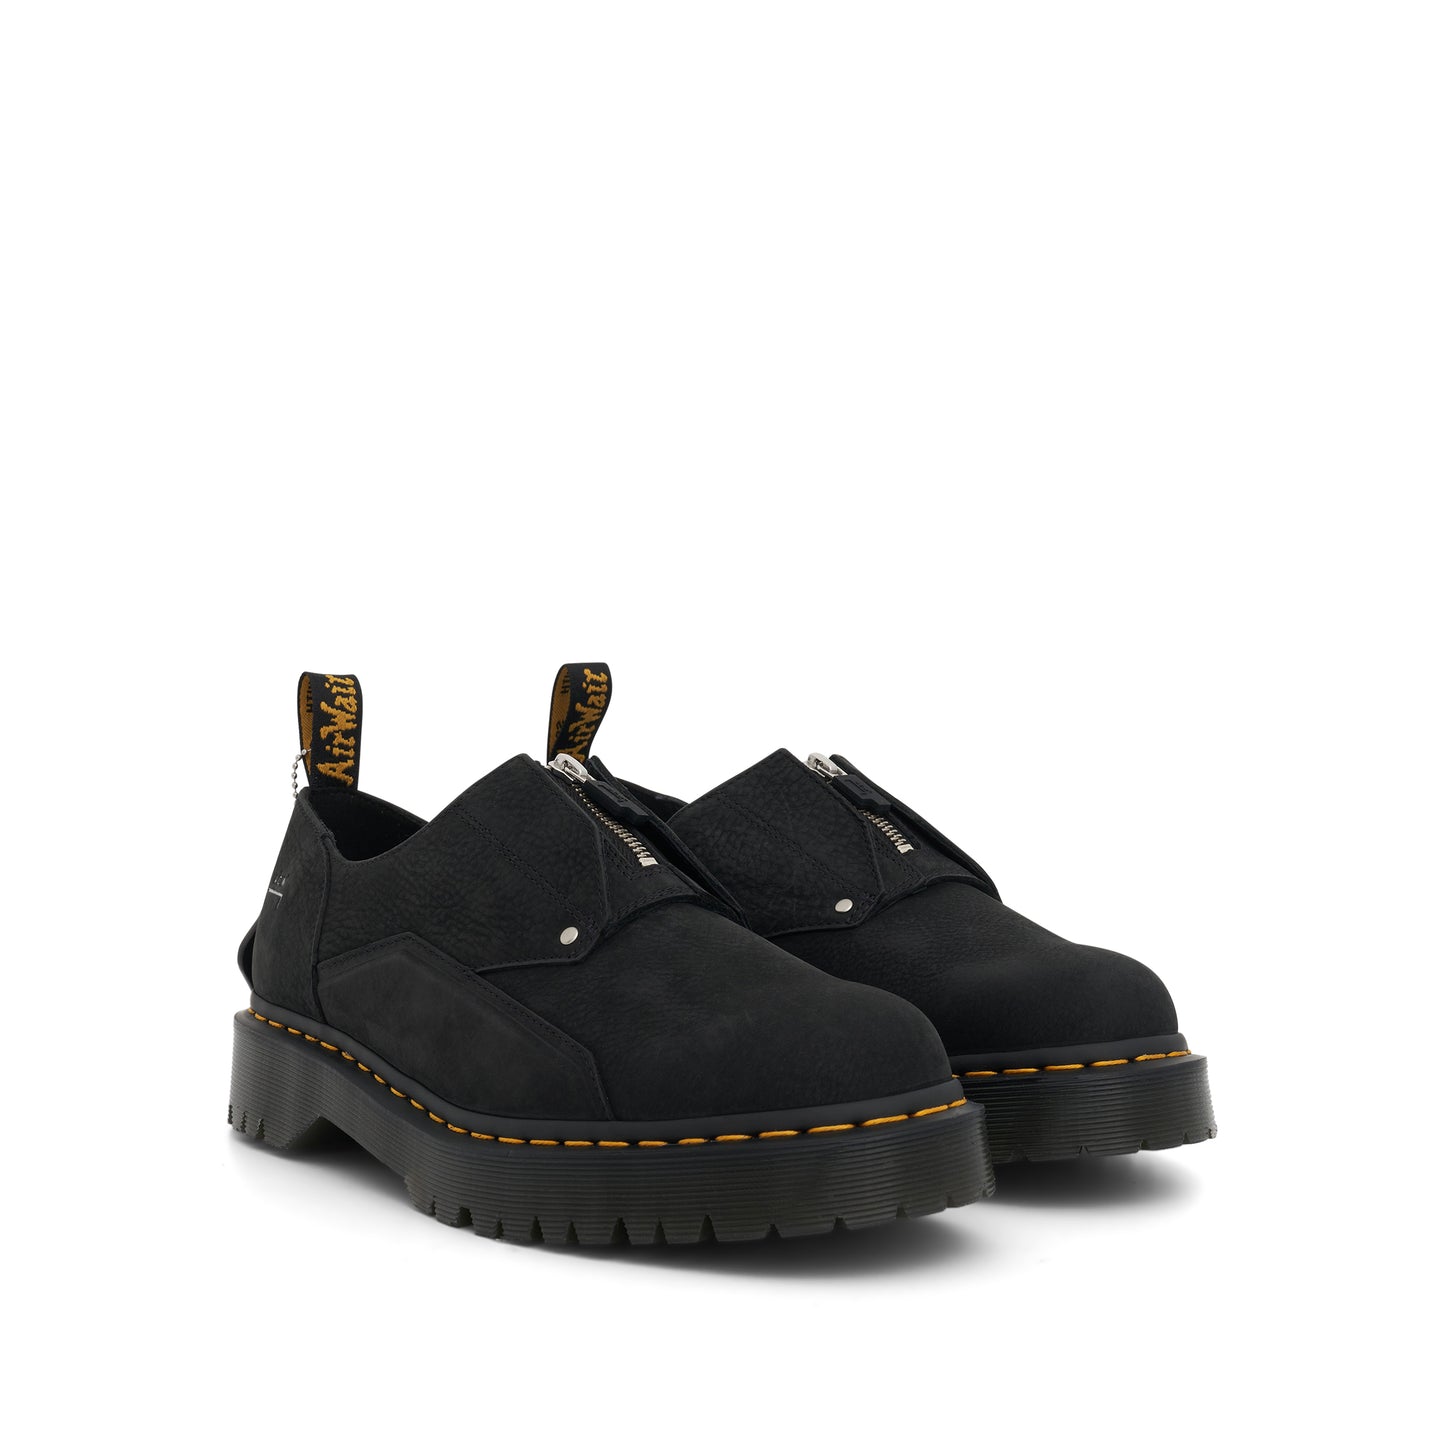 ACW x Dr Martens 1461 Bex Low Shoes in Black